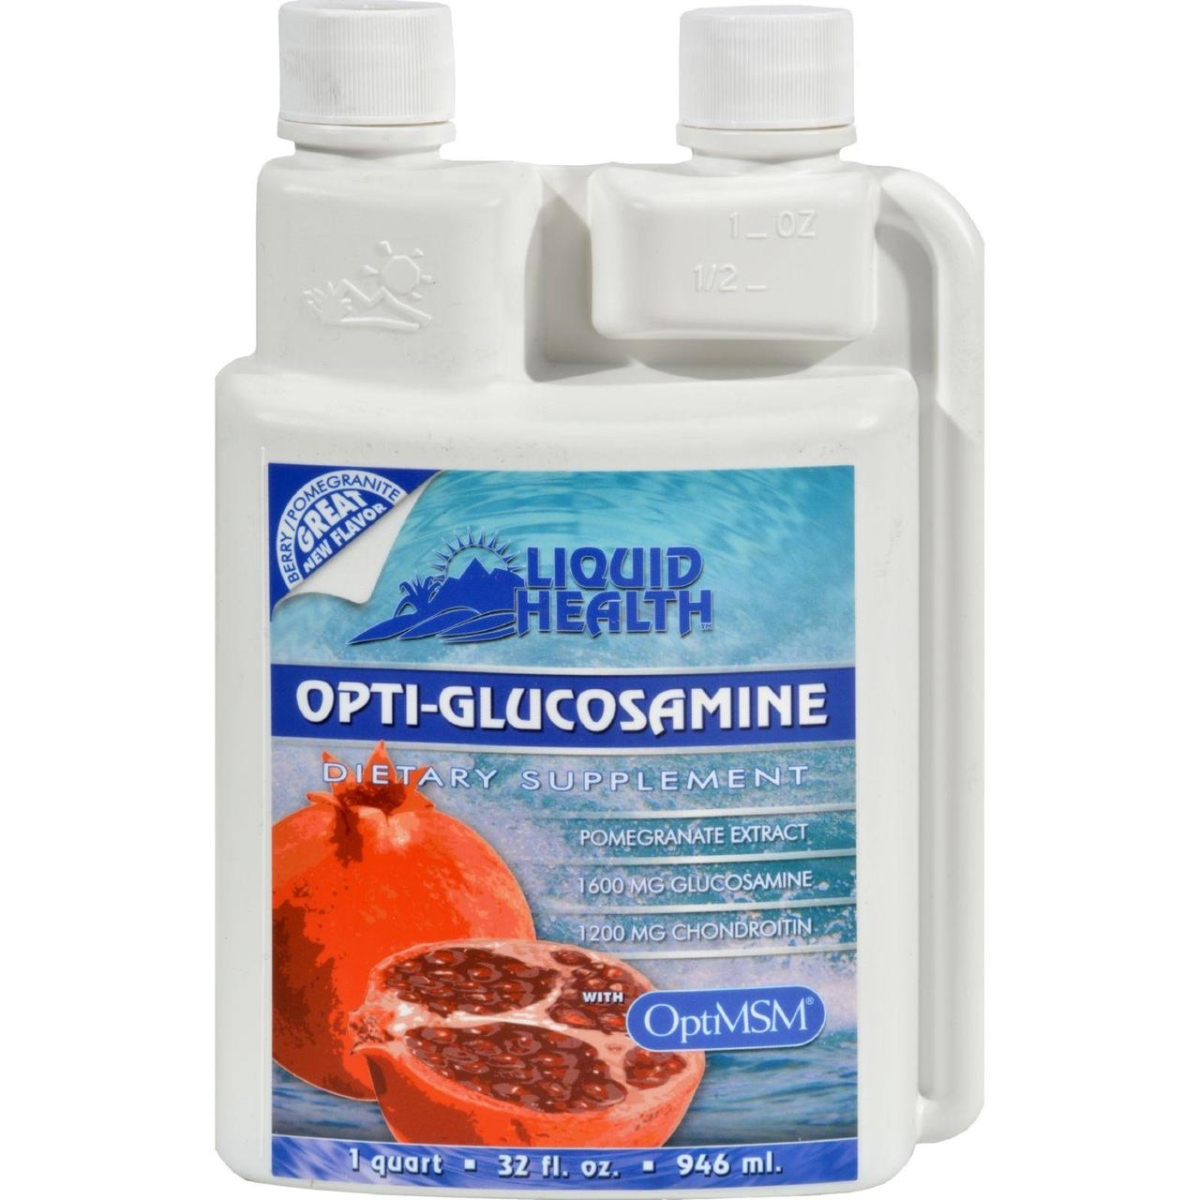 Hg0886333 32 Fl Oz Liquid Health Opti-glucosamine Berry Pomegranate